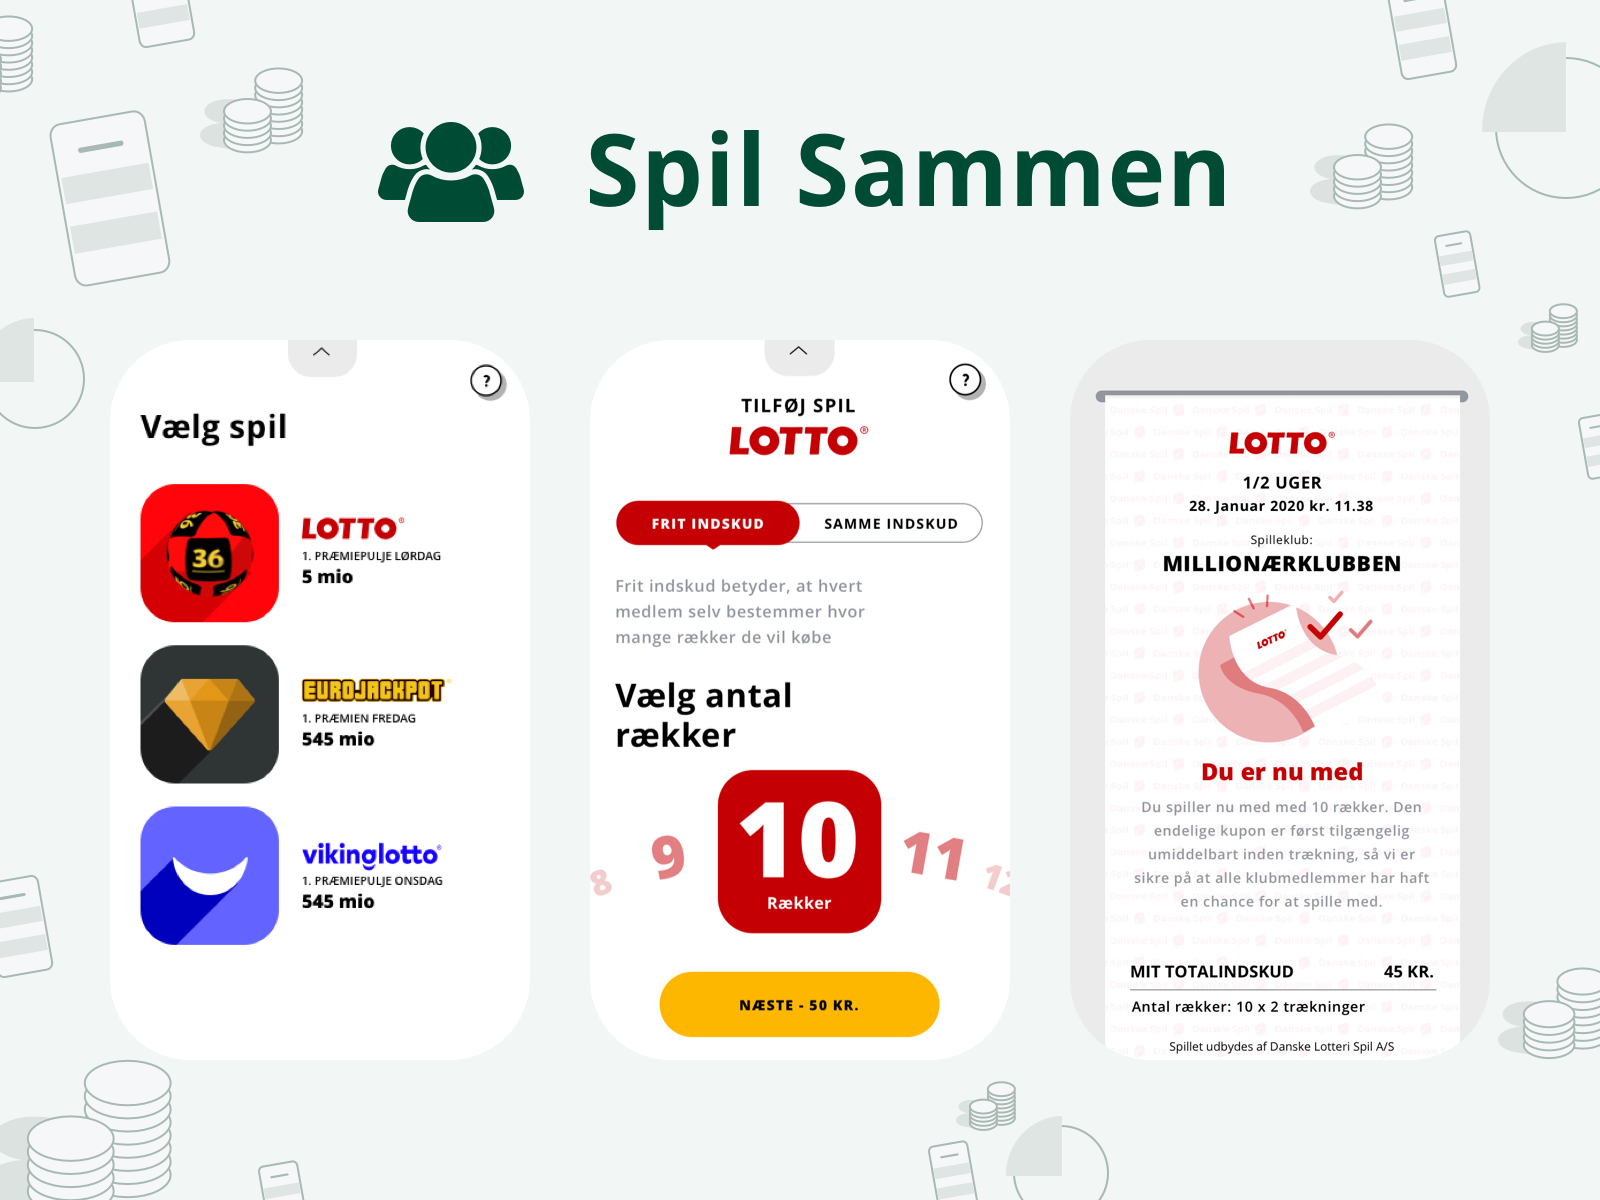 Spil-Sammen-lotto-jonas-eilsø-jonaseilsoe.dk-new